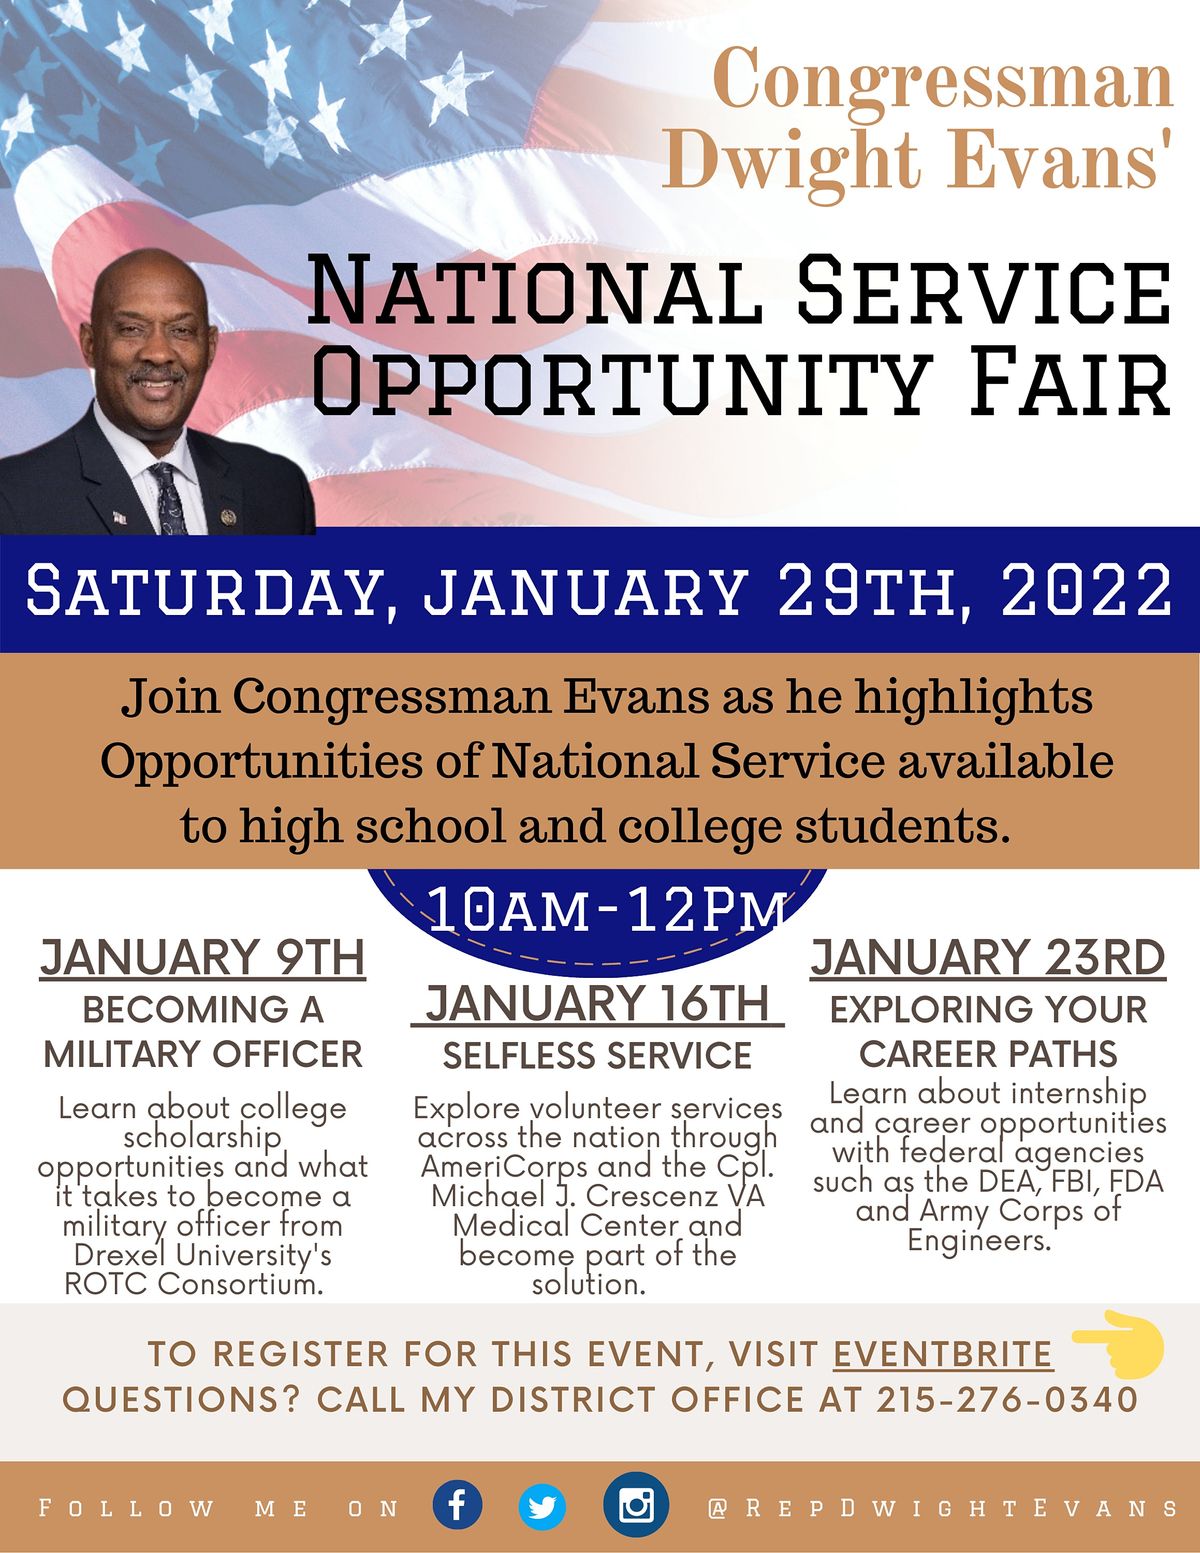 Congressman Dwight Evans' National Service Opportunity Fair